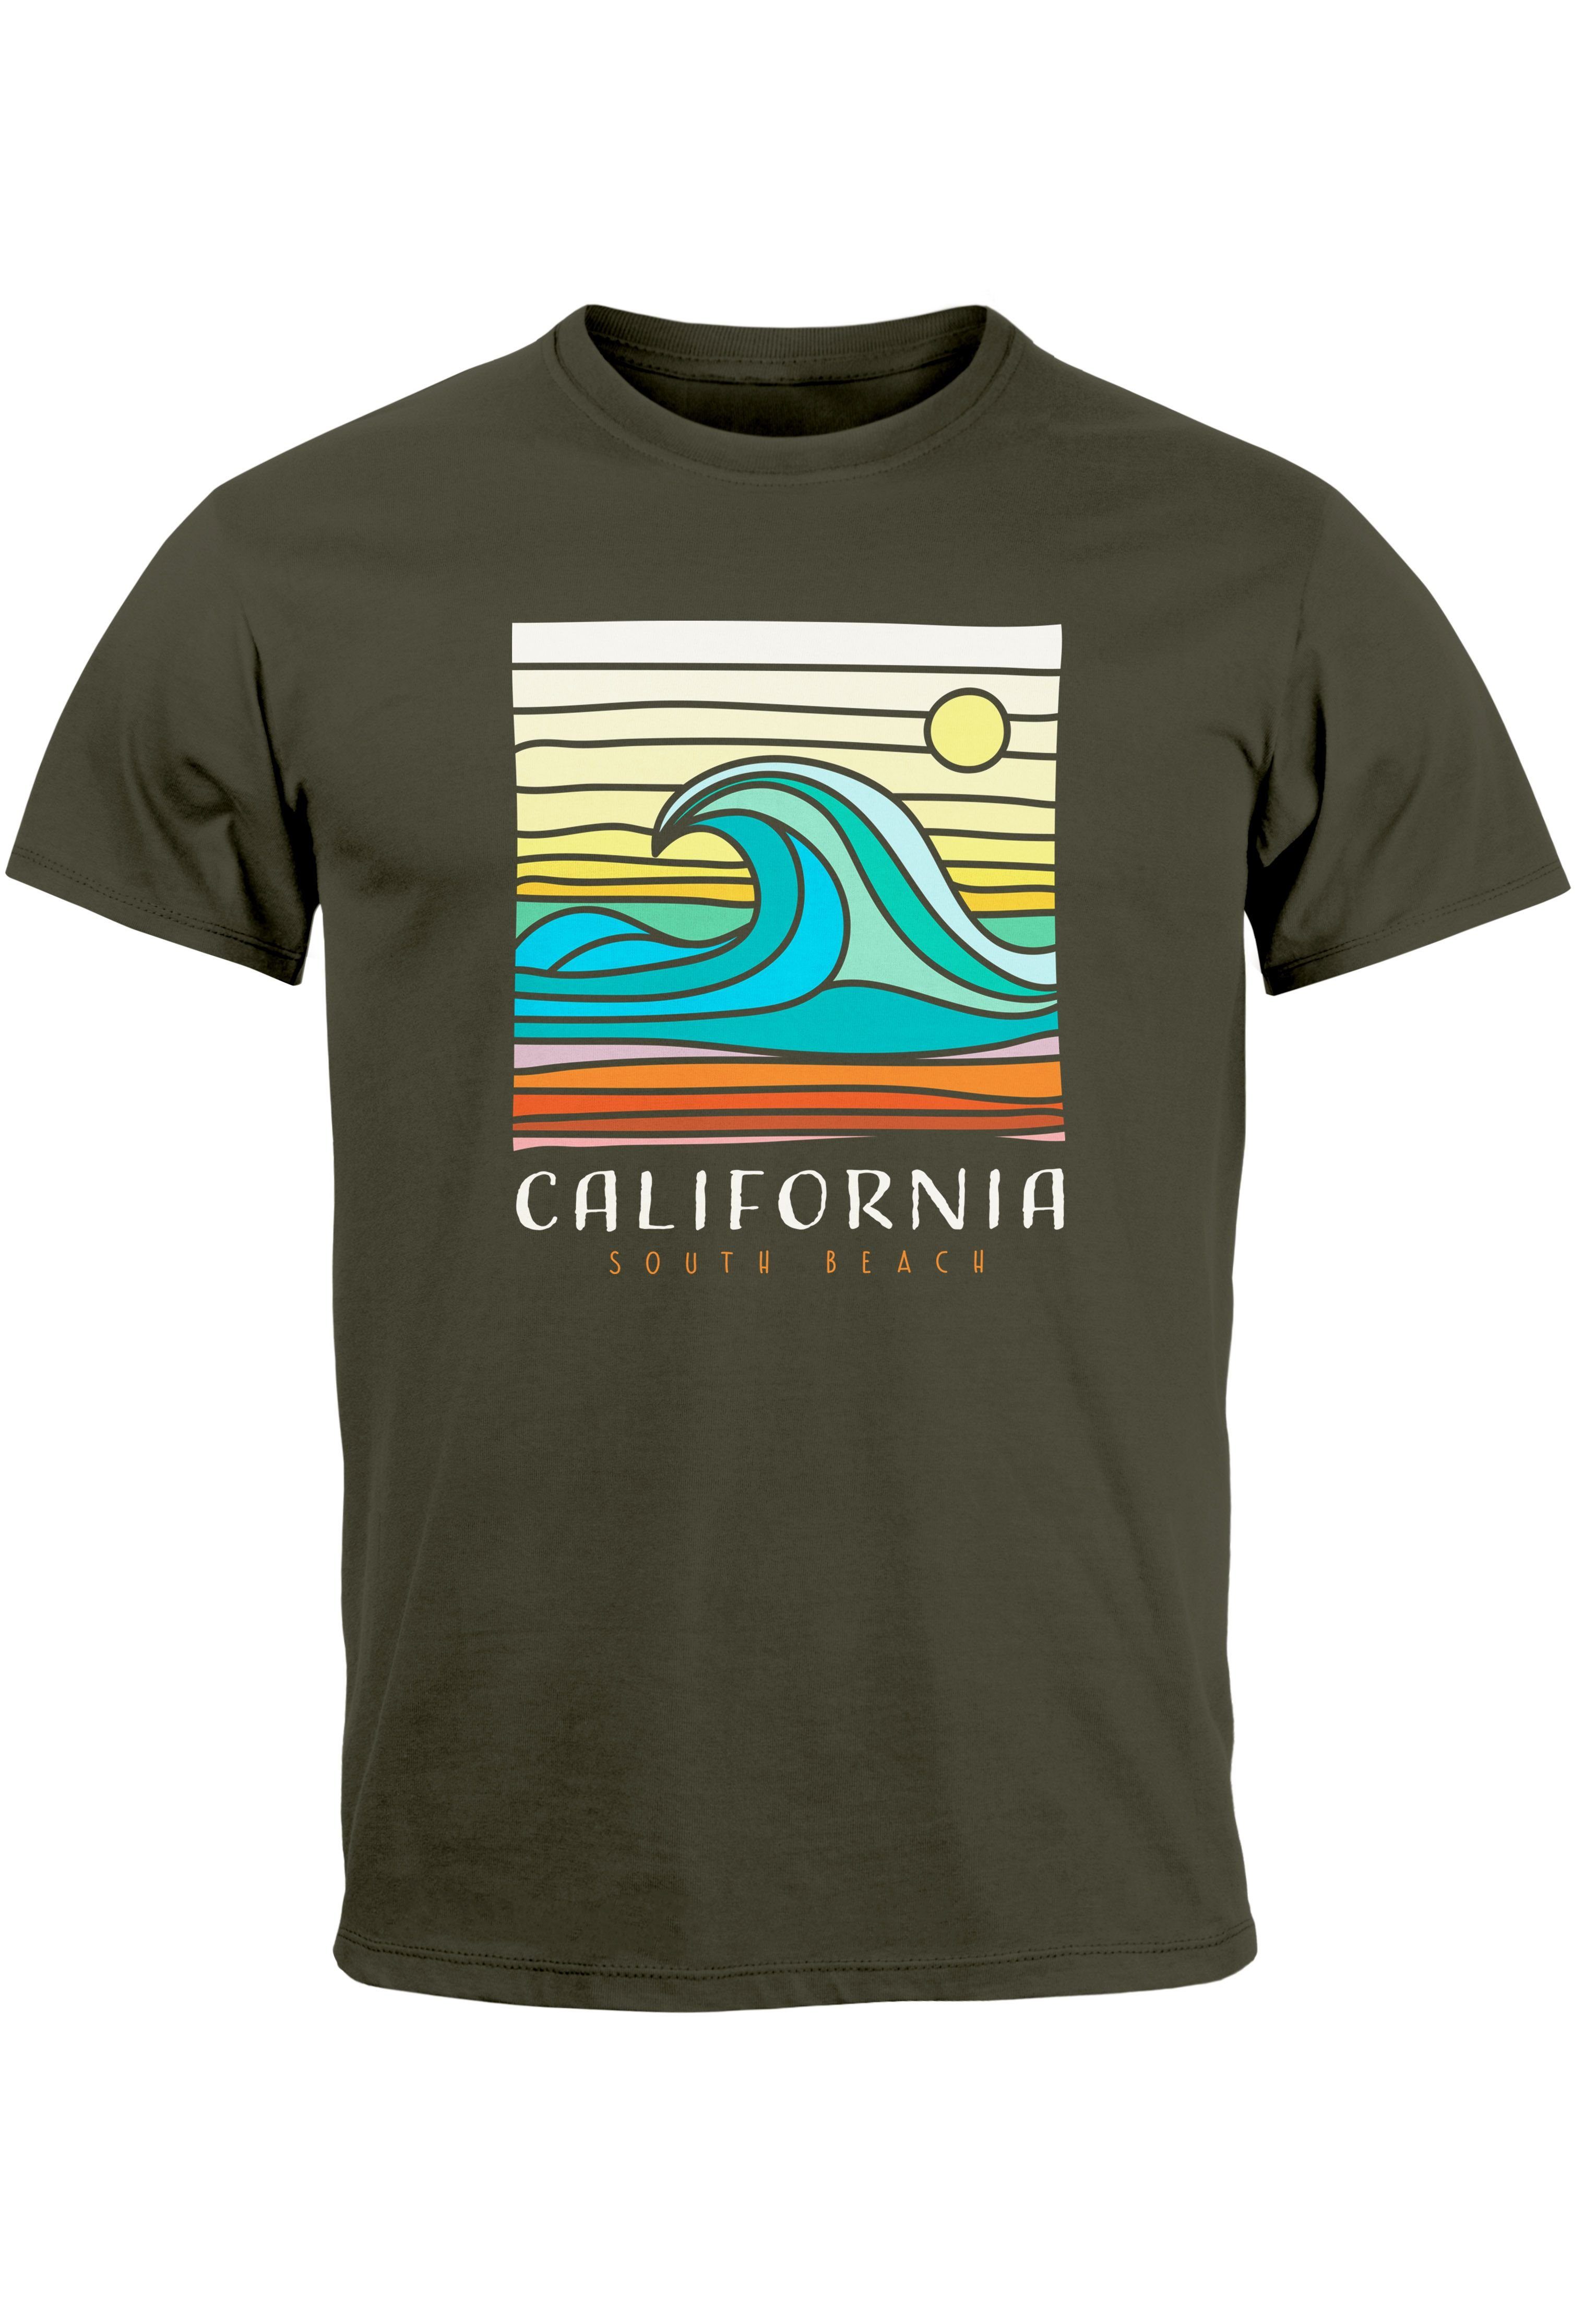 Neverless Print-Shirt Herren T-Shirt California South Beach Welle Wave Surfing Print Aufdruc mit Print army